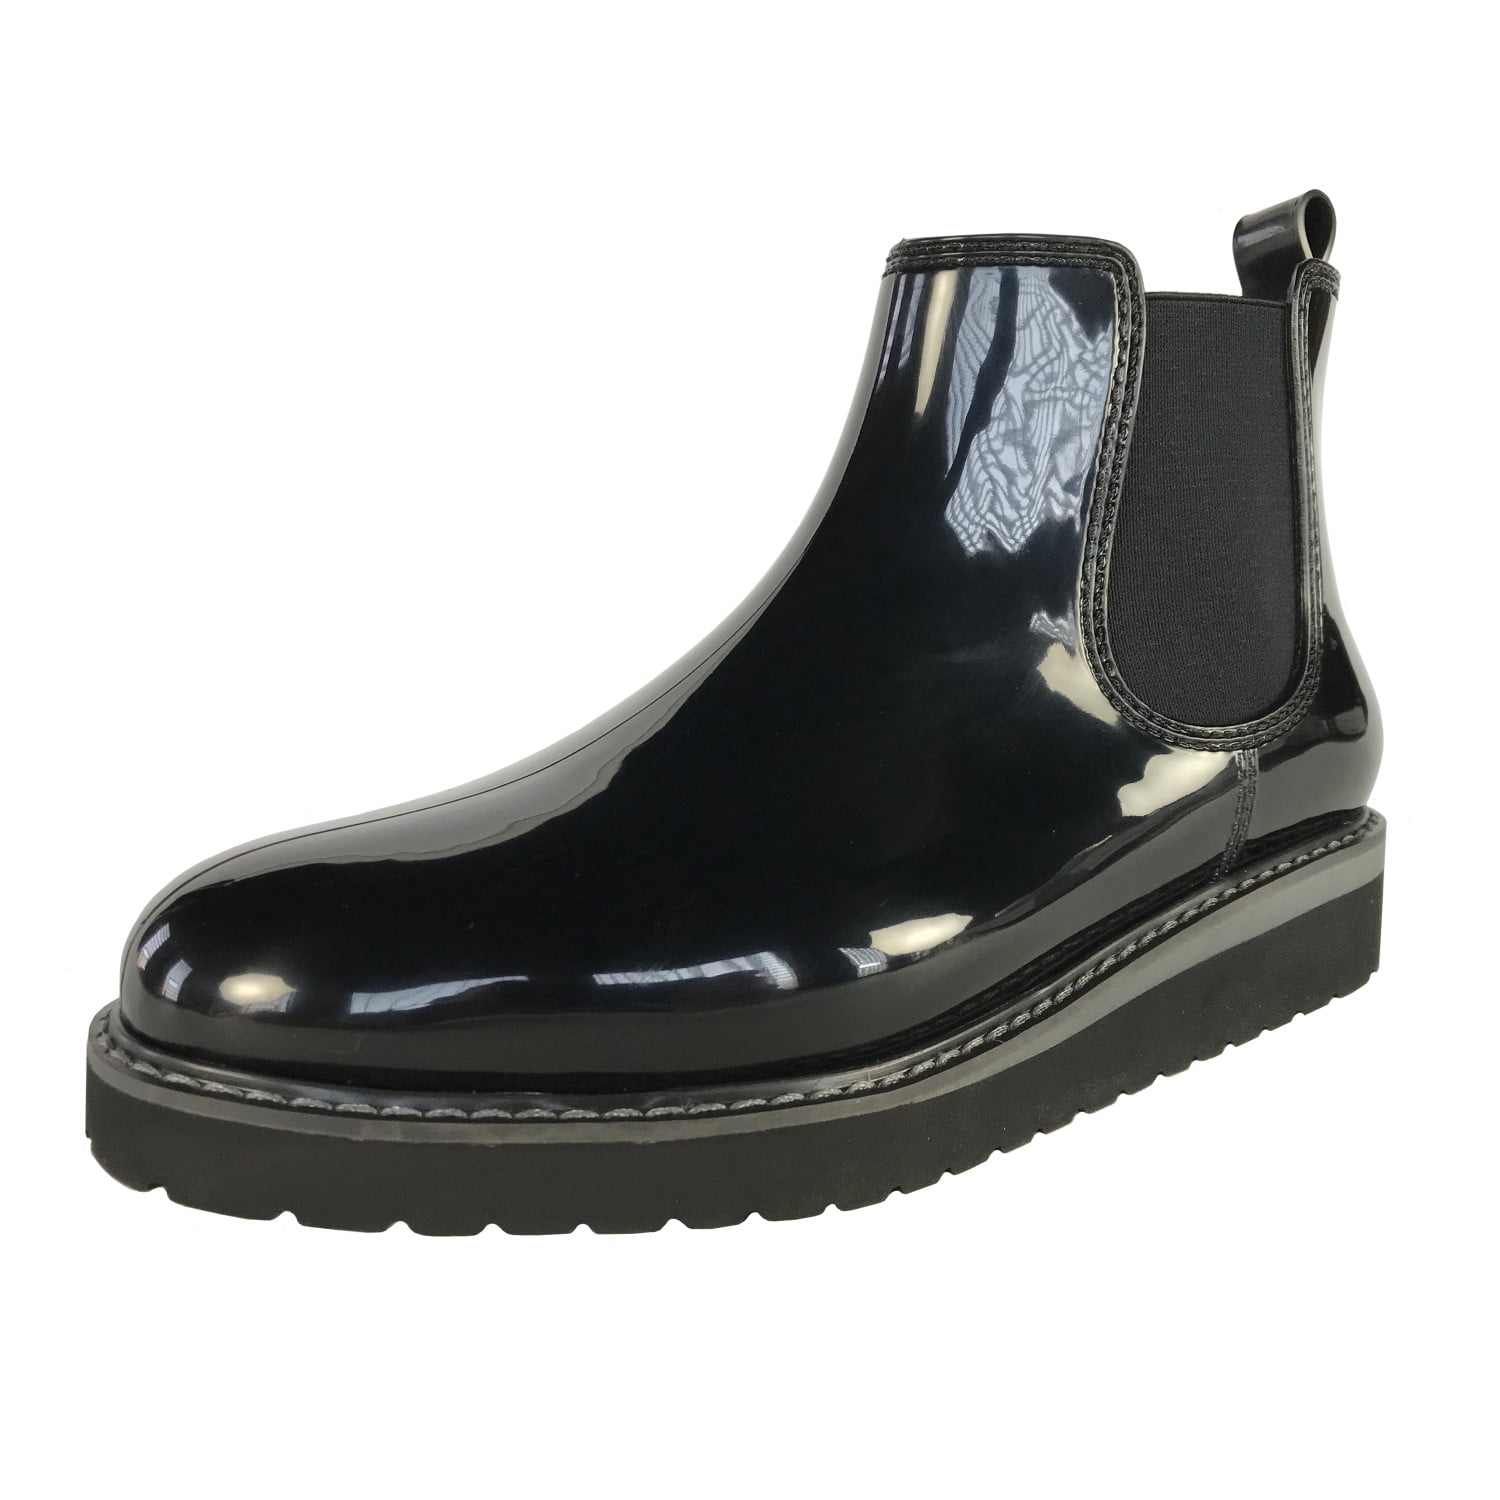 Cougar Women's Kensington Ankle-High Rubber Rain Boot - 10M - Black ...